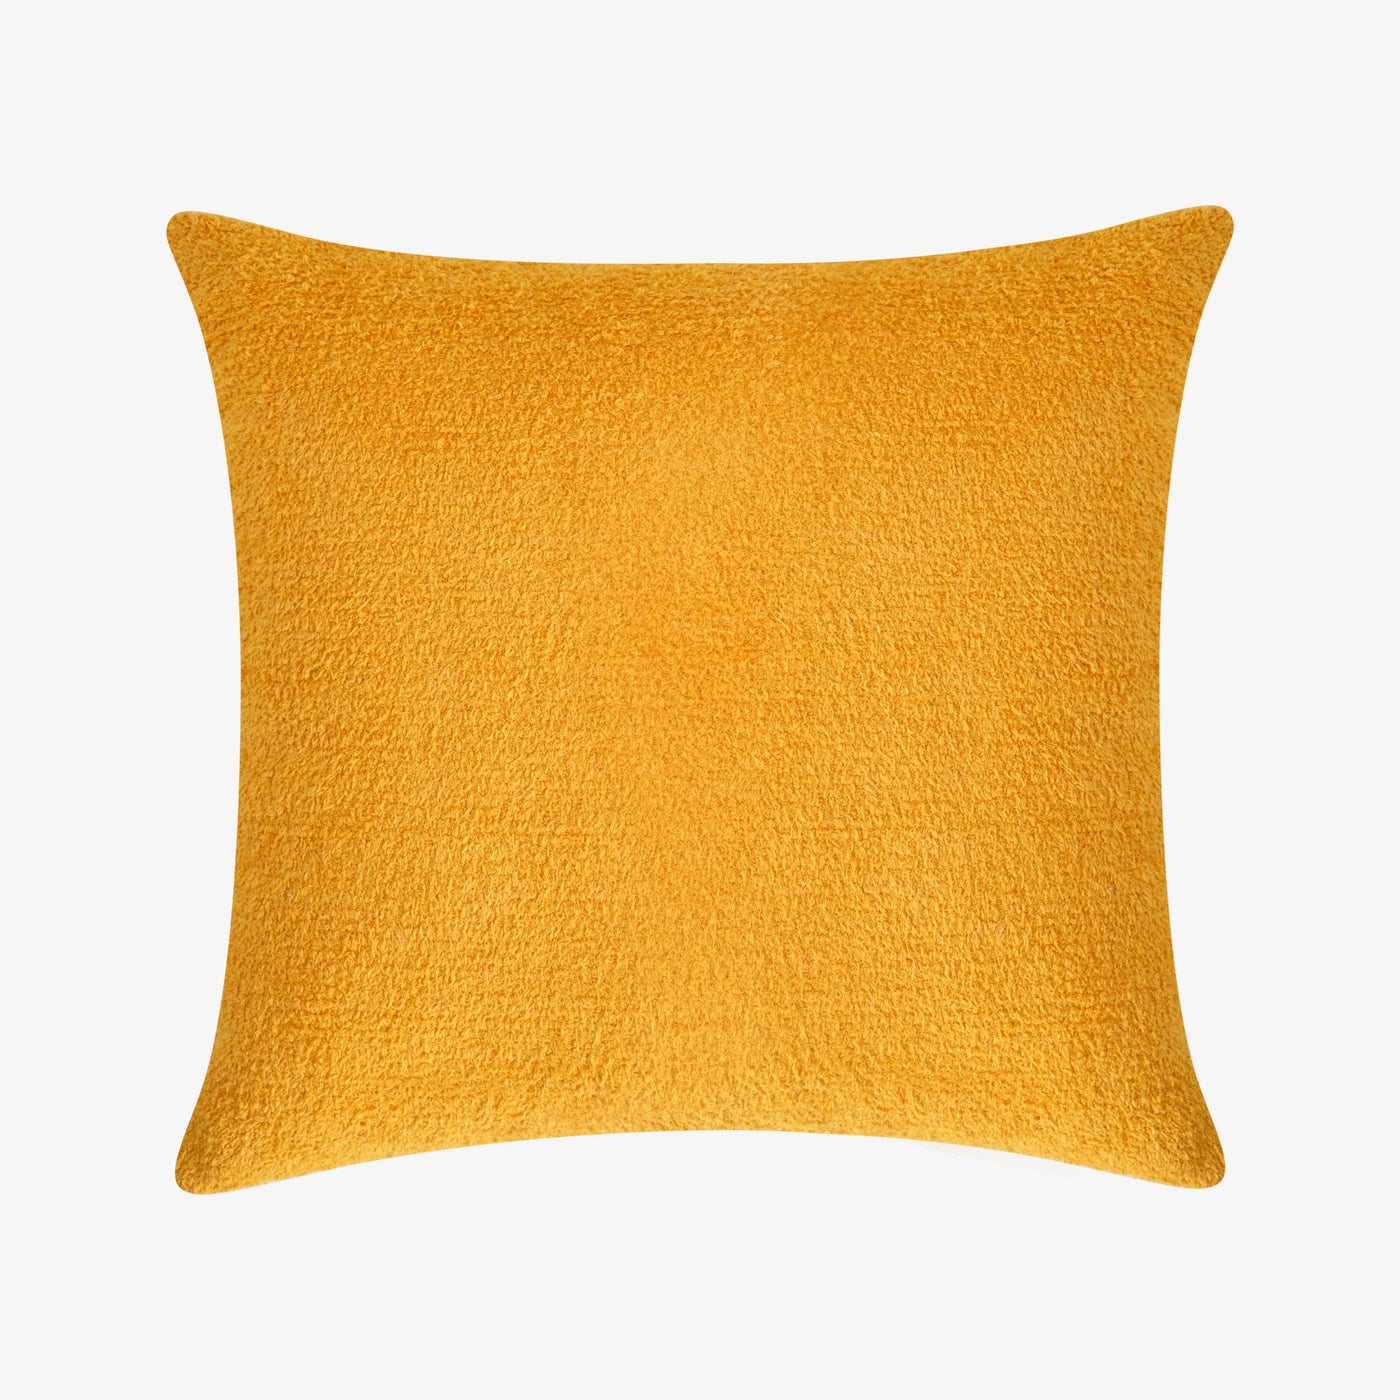 Boucle Cushion Cover, Mustard, 50x50 cm Cushion Covers sazy.com